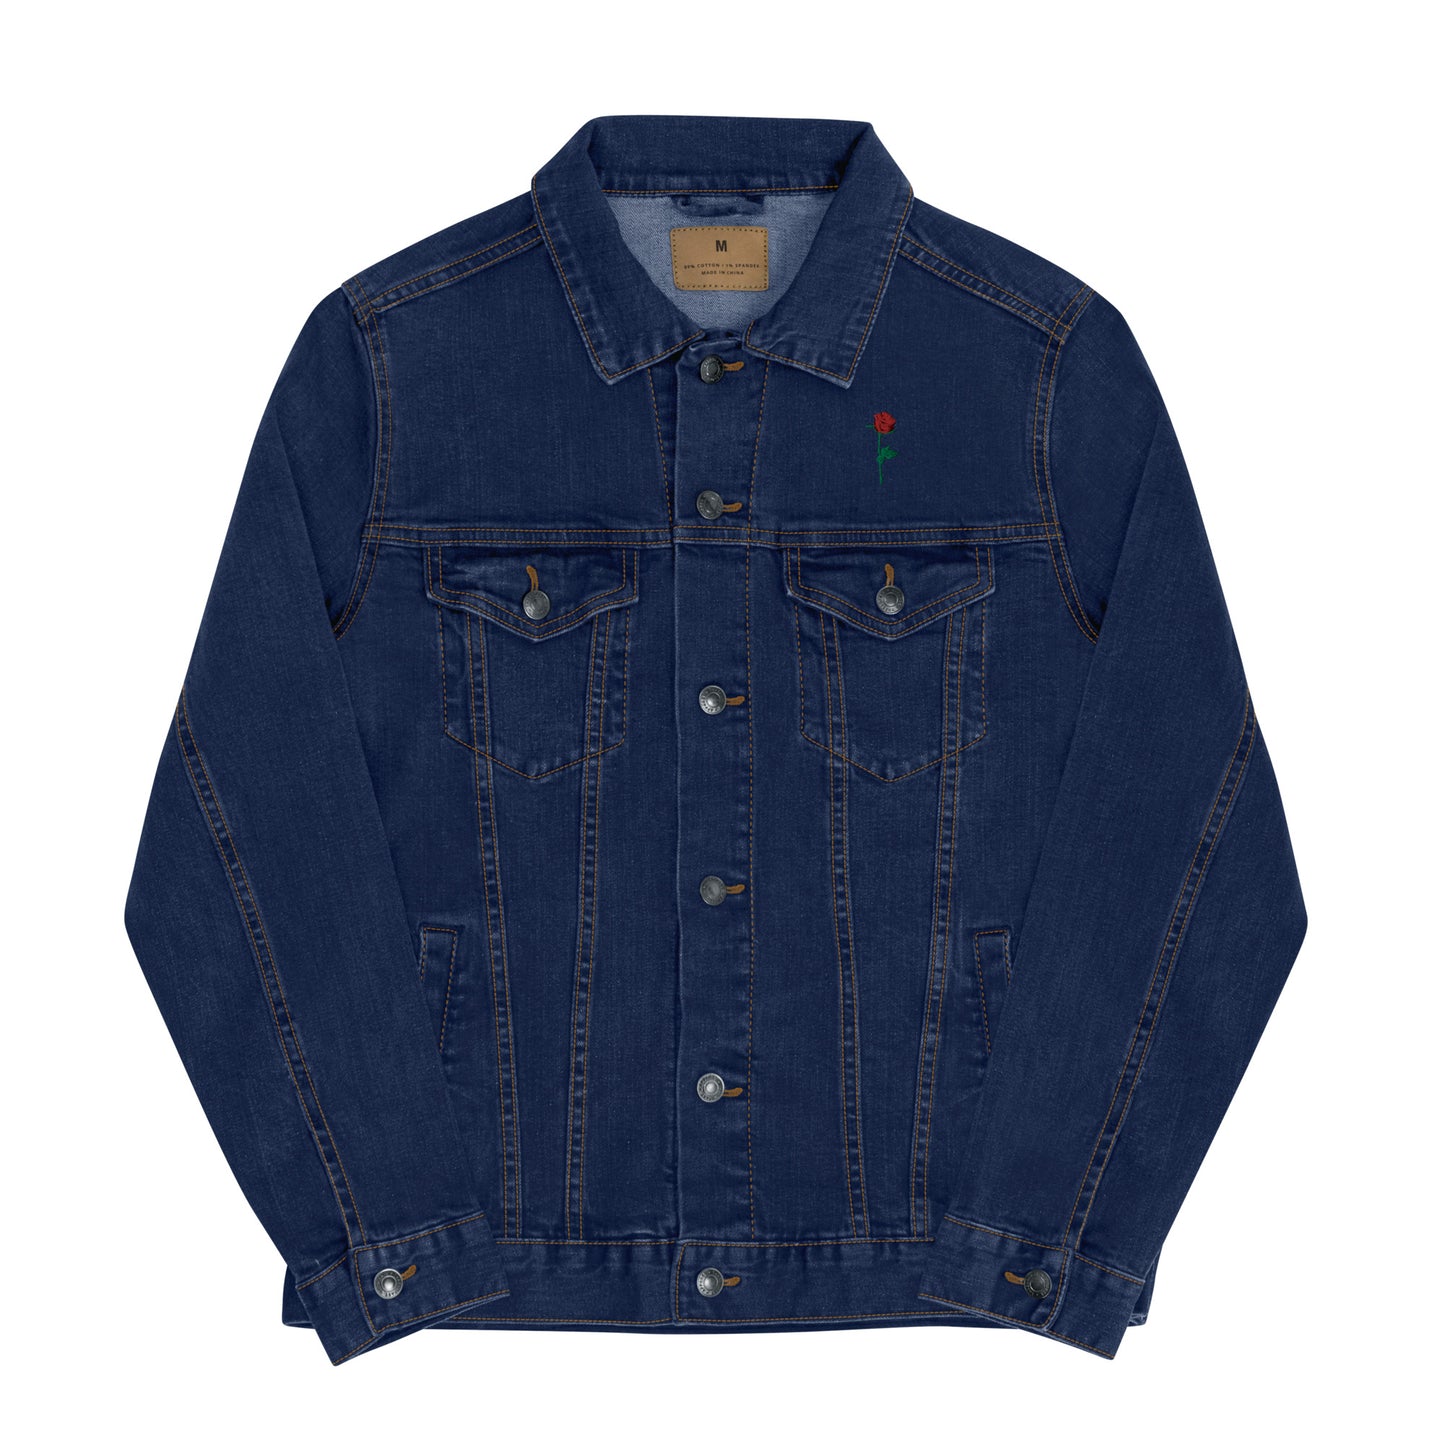 Adonis-Creations - Men's Cotton, Embroidered, Denim, jean jacket